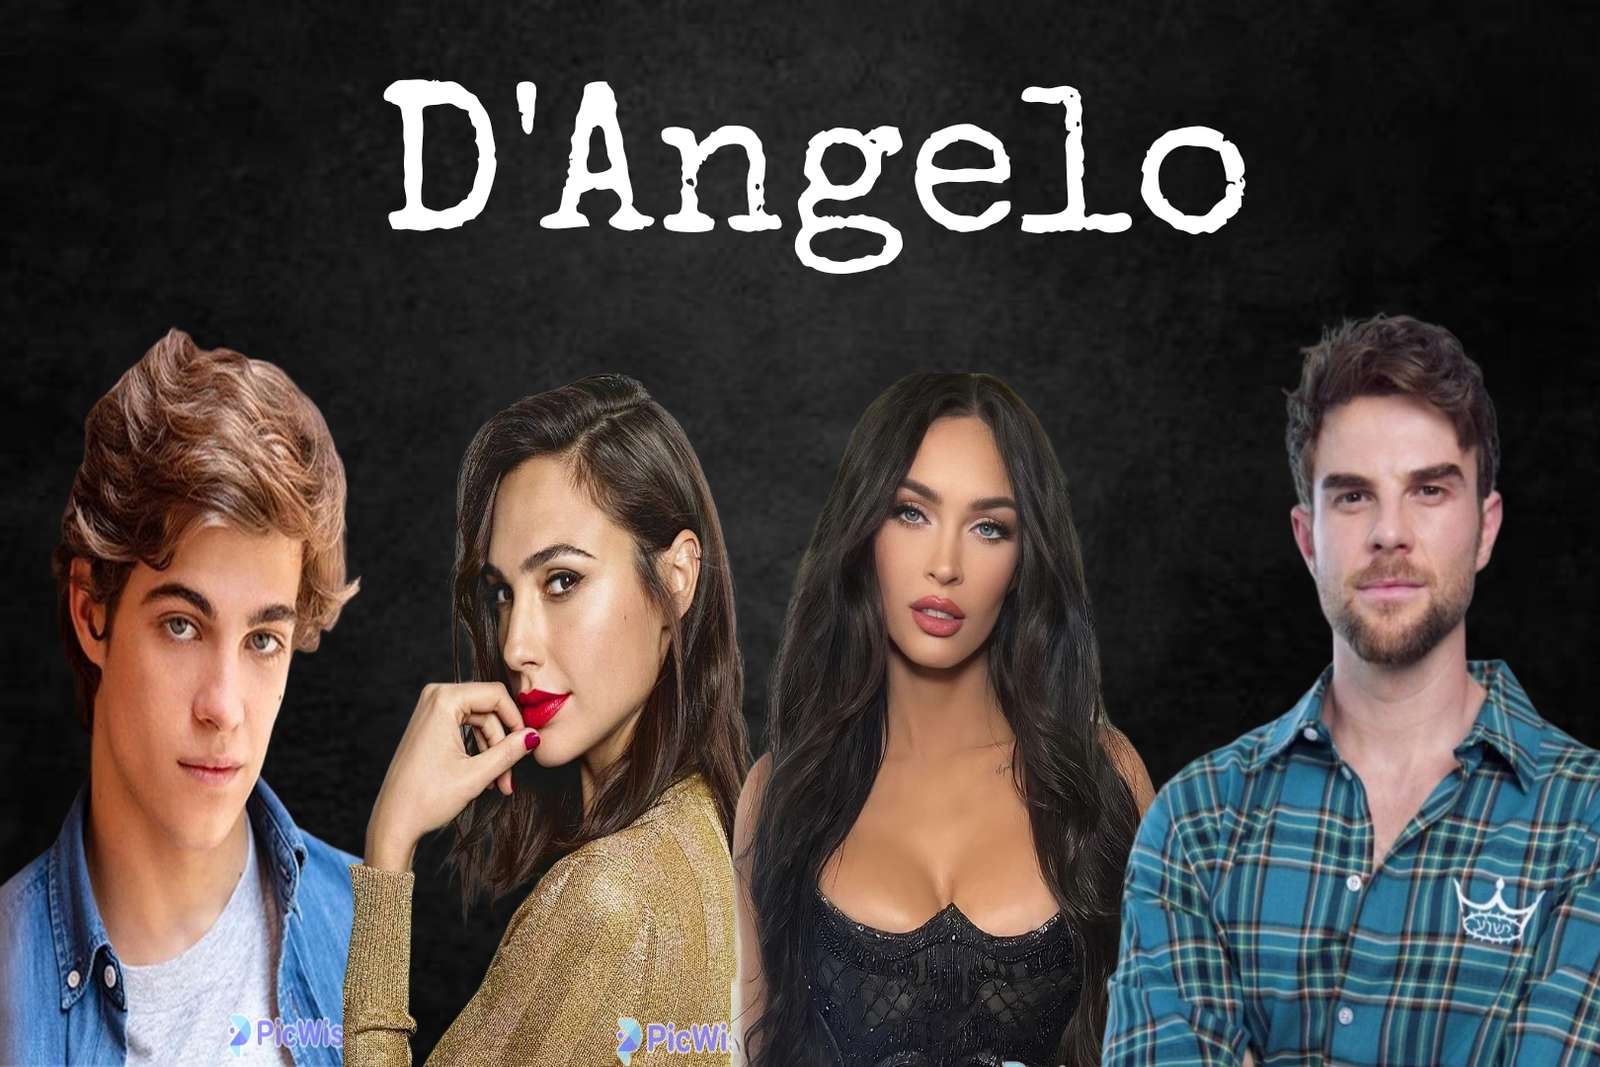 Rodina D'Angelo online puzzle